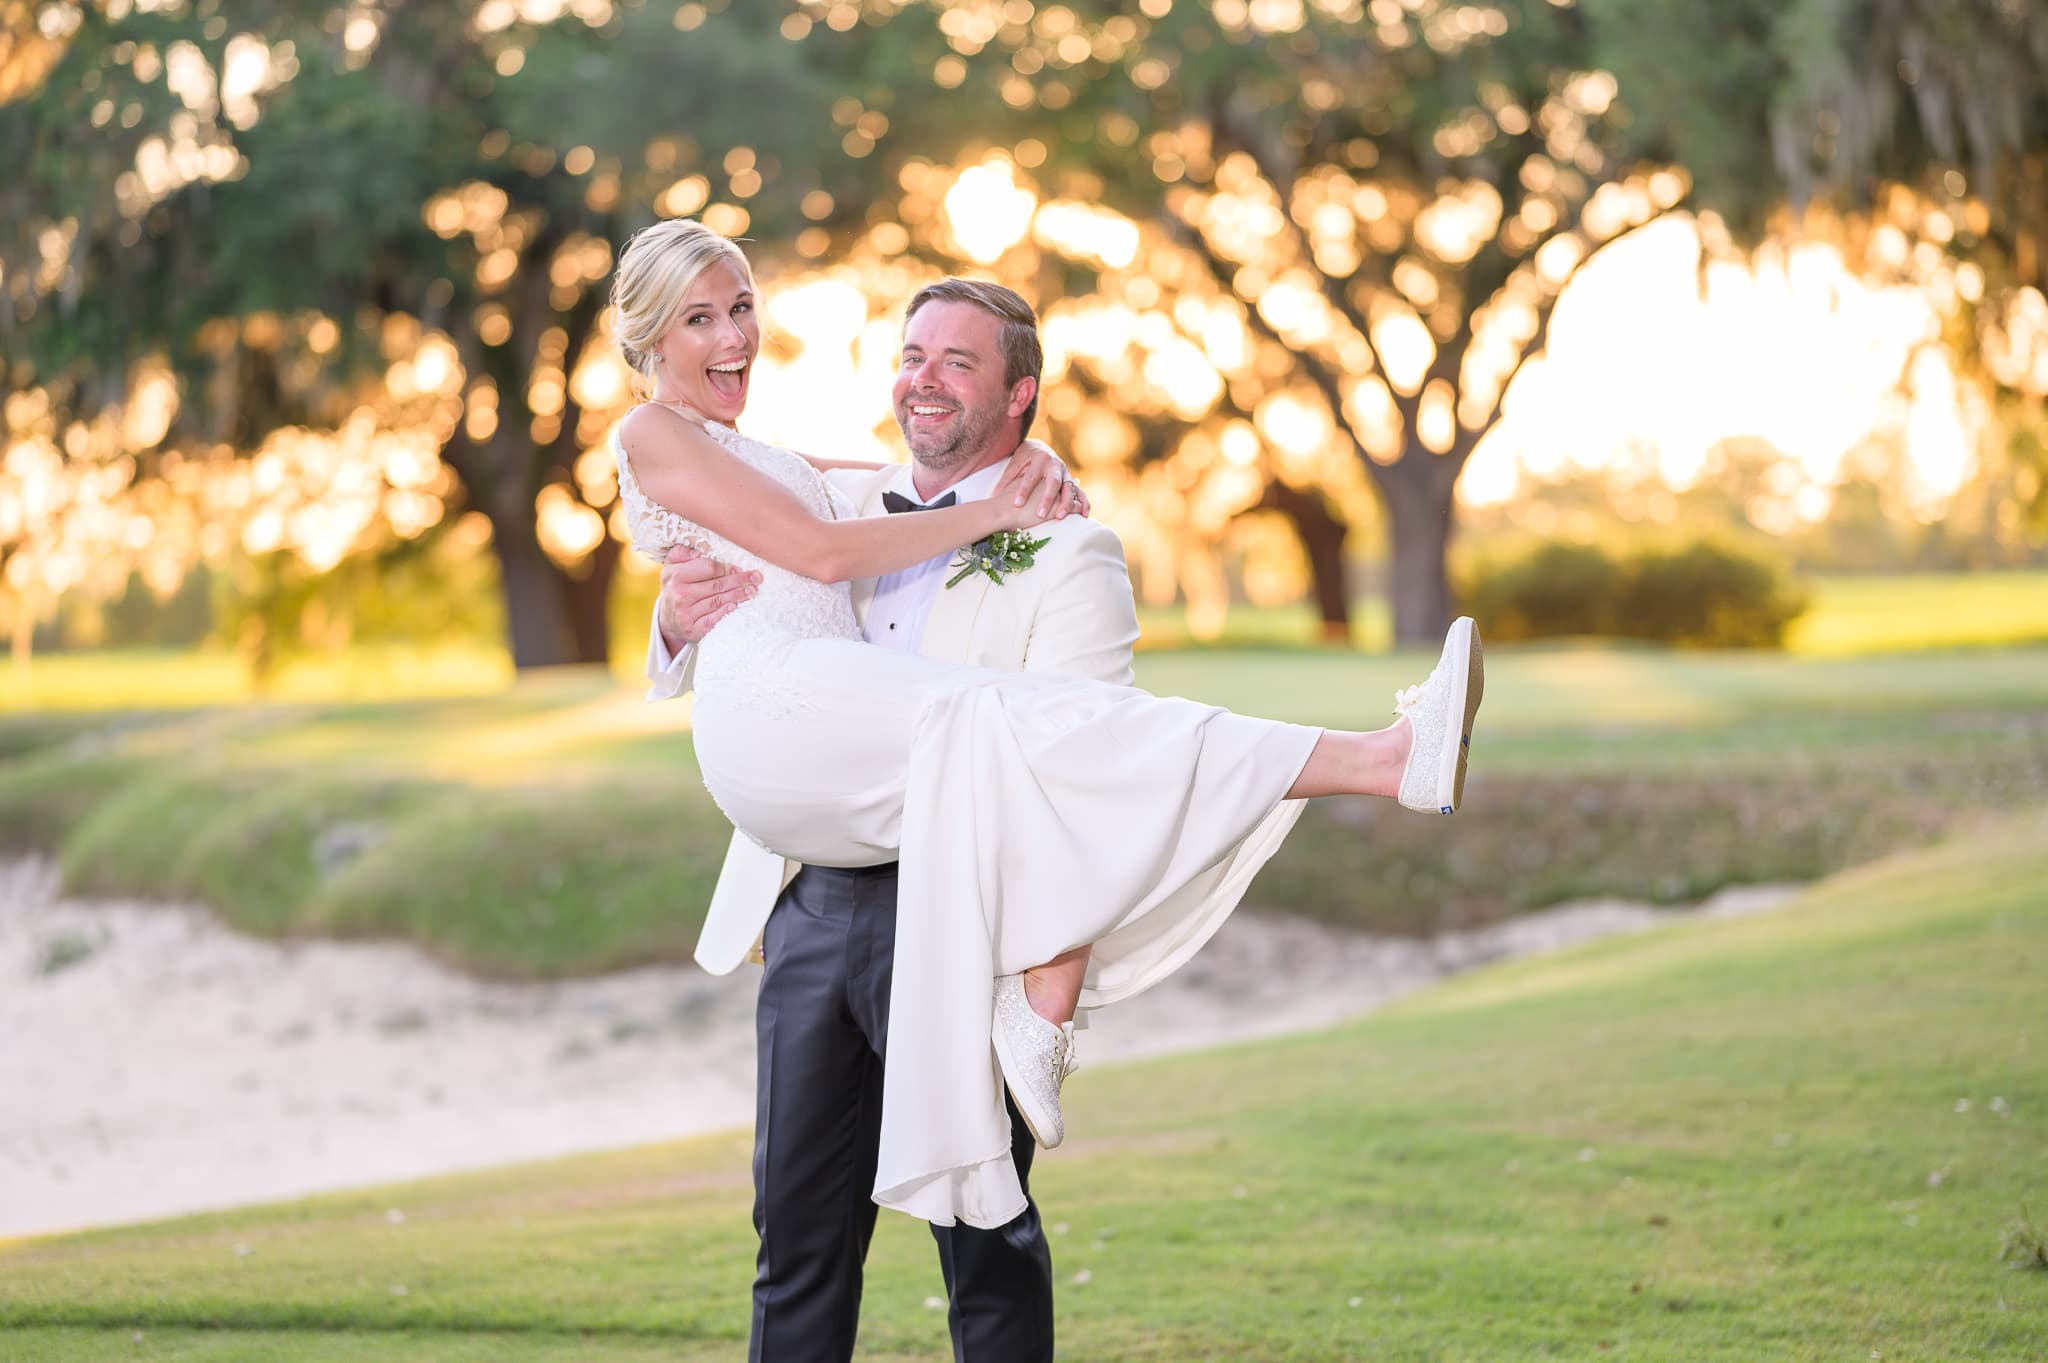 Lifting bride into the air - Caledonia Golf & Fish Club